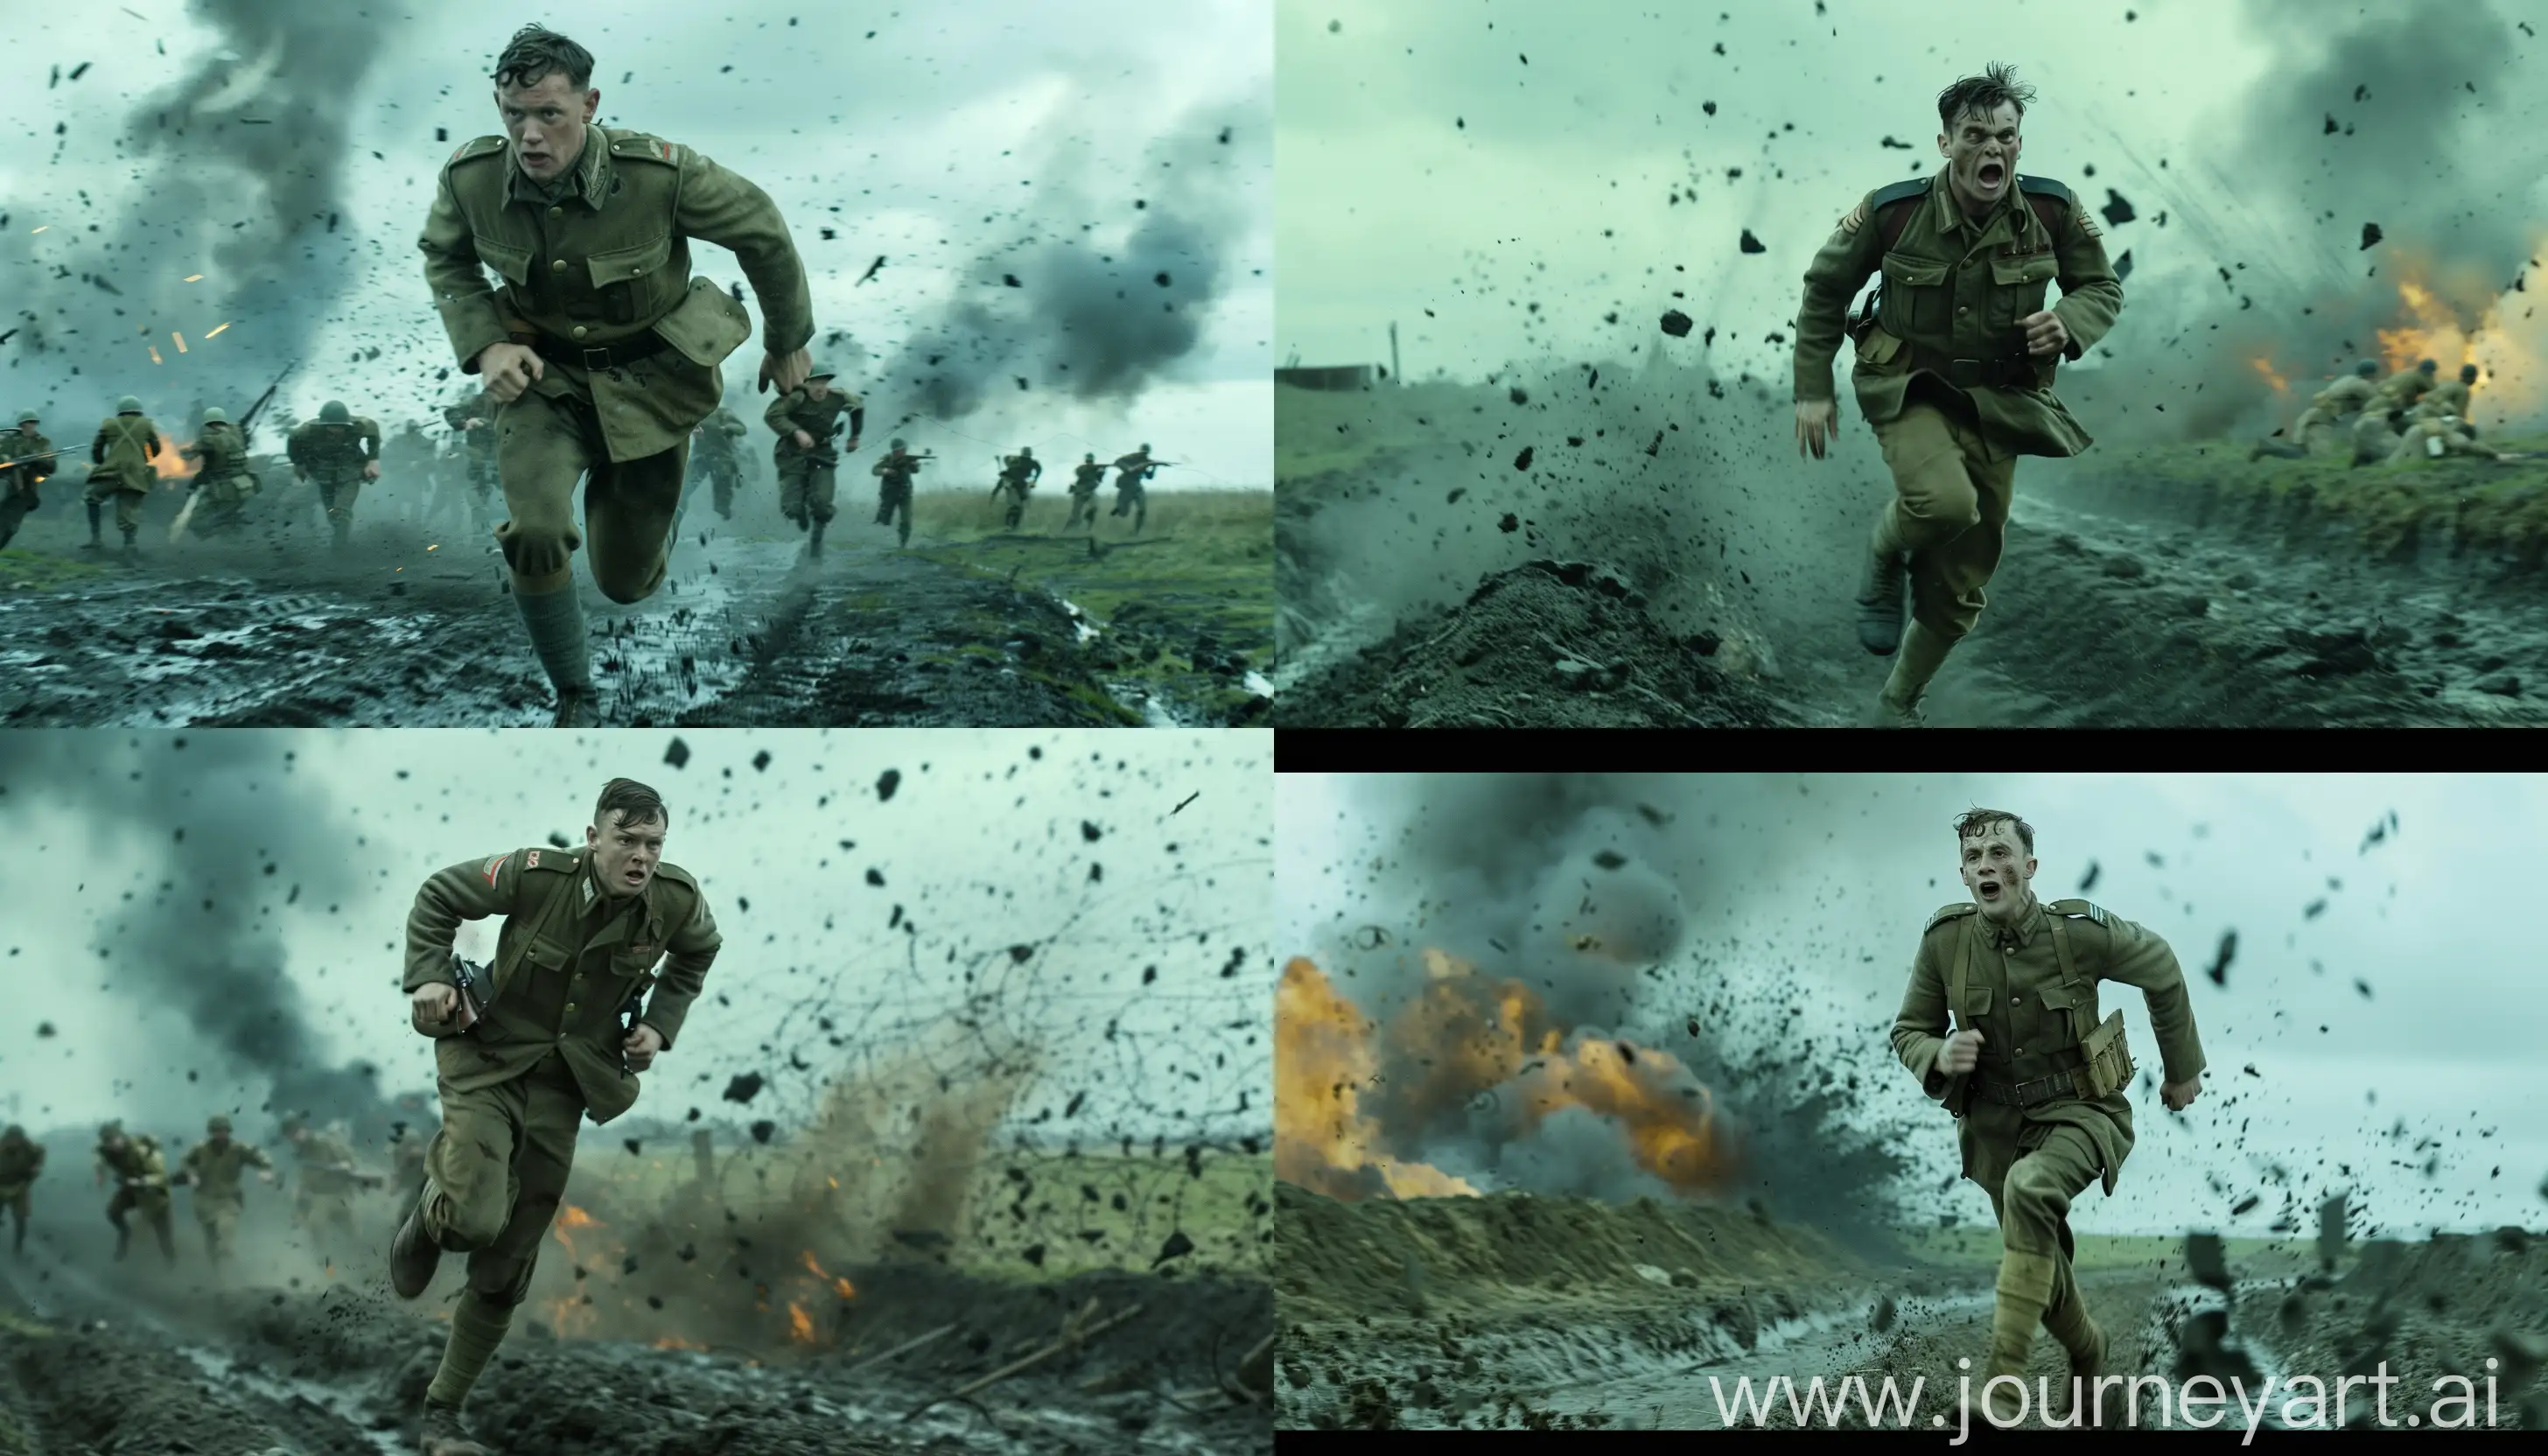 Courageous-World-War-II-Soldier-Running-on-Battlefield